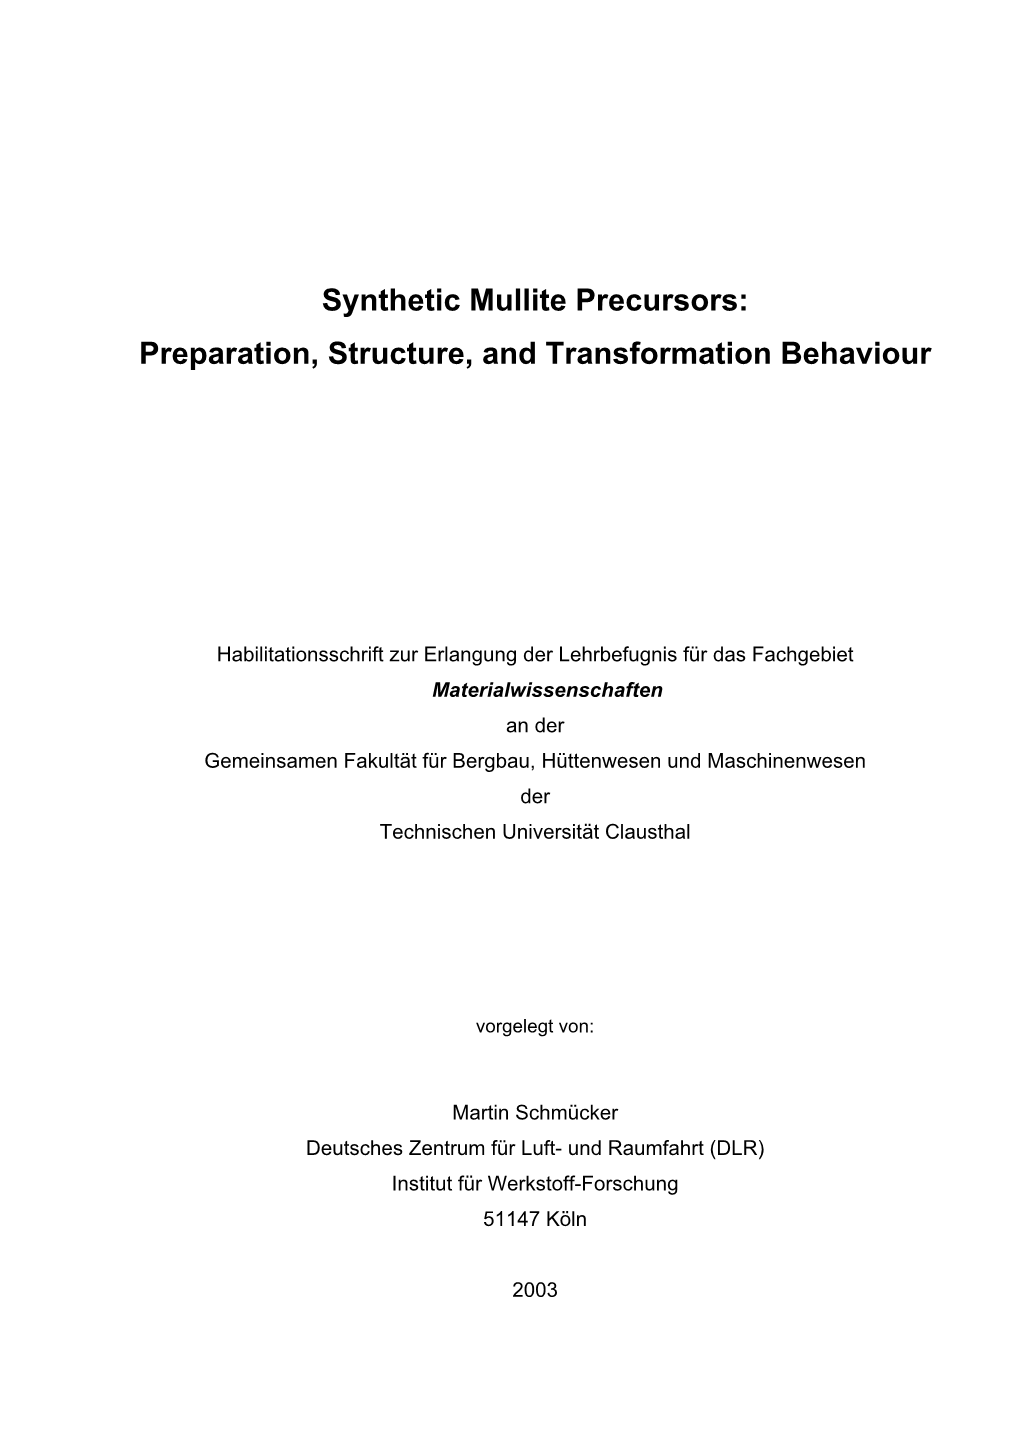 Synthetic Mullite Precursors: Preparation, Structure, and Transformation Behaviour